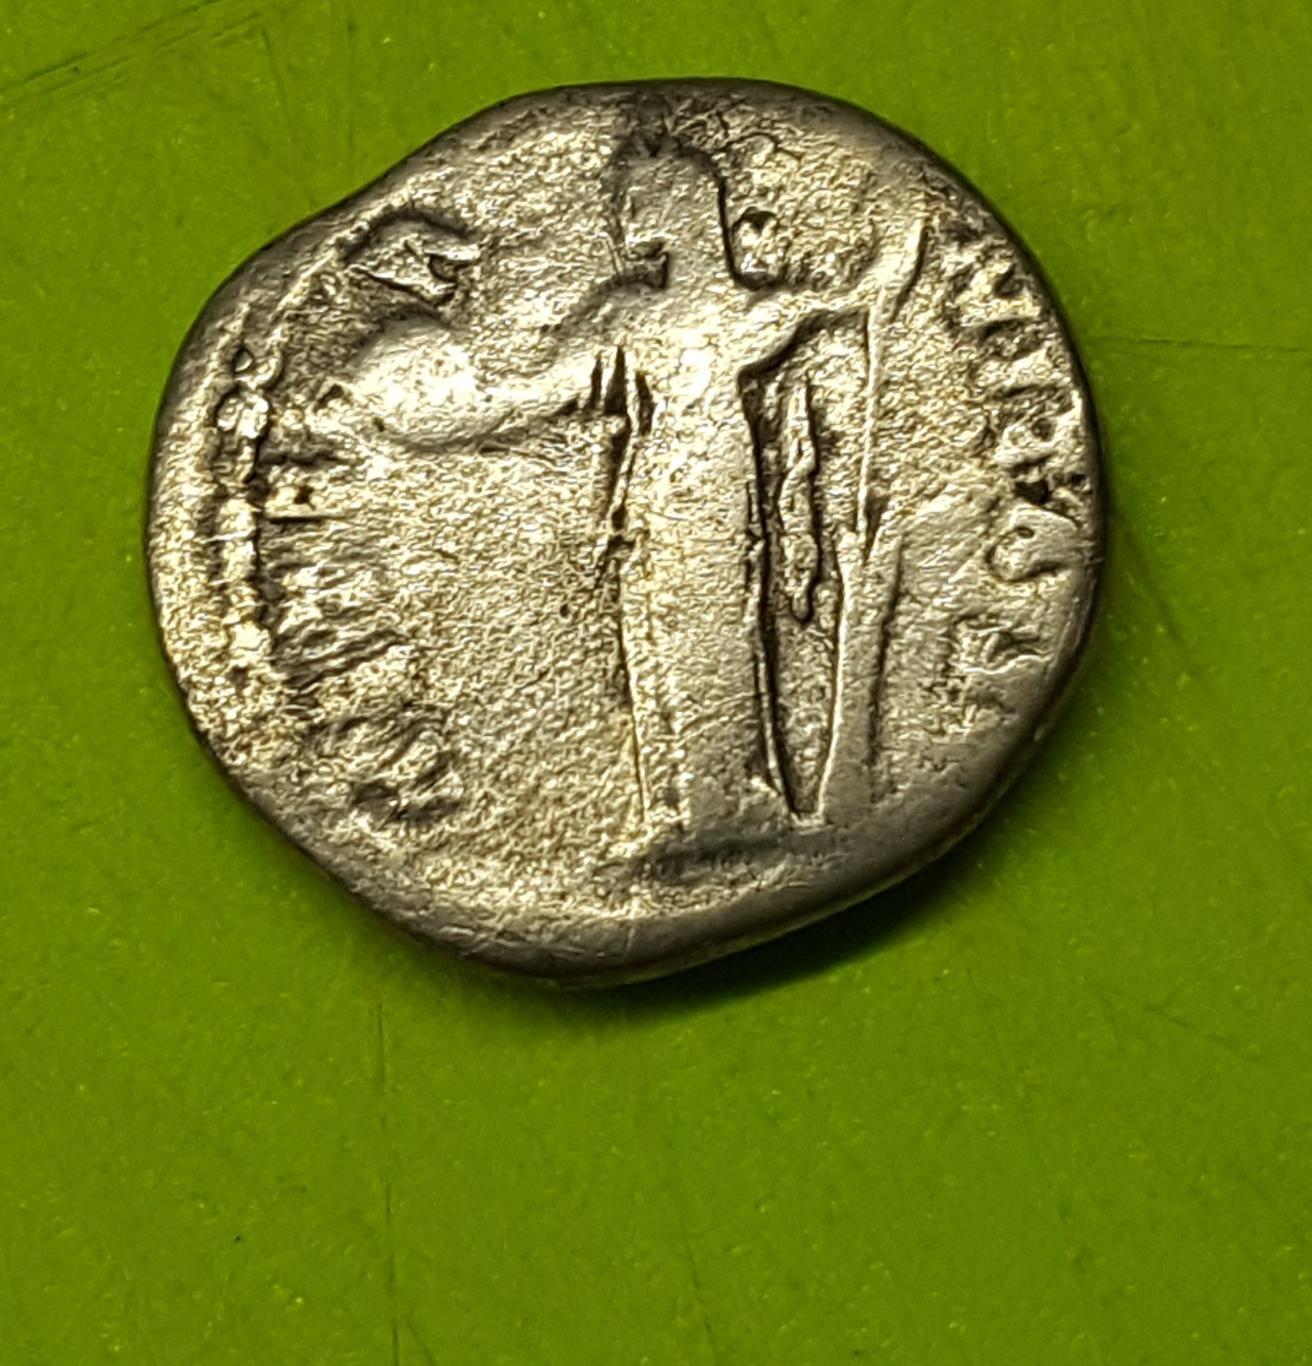 Римской империи - Рим 141-161 гг. н.э. - Diva Faustina IСеребро100% Оригина 1